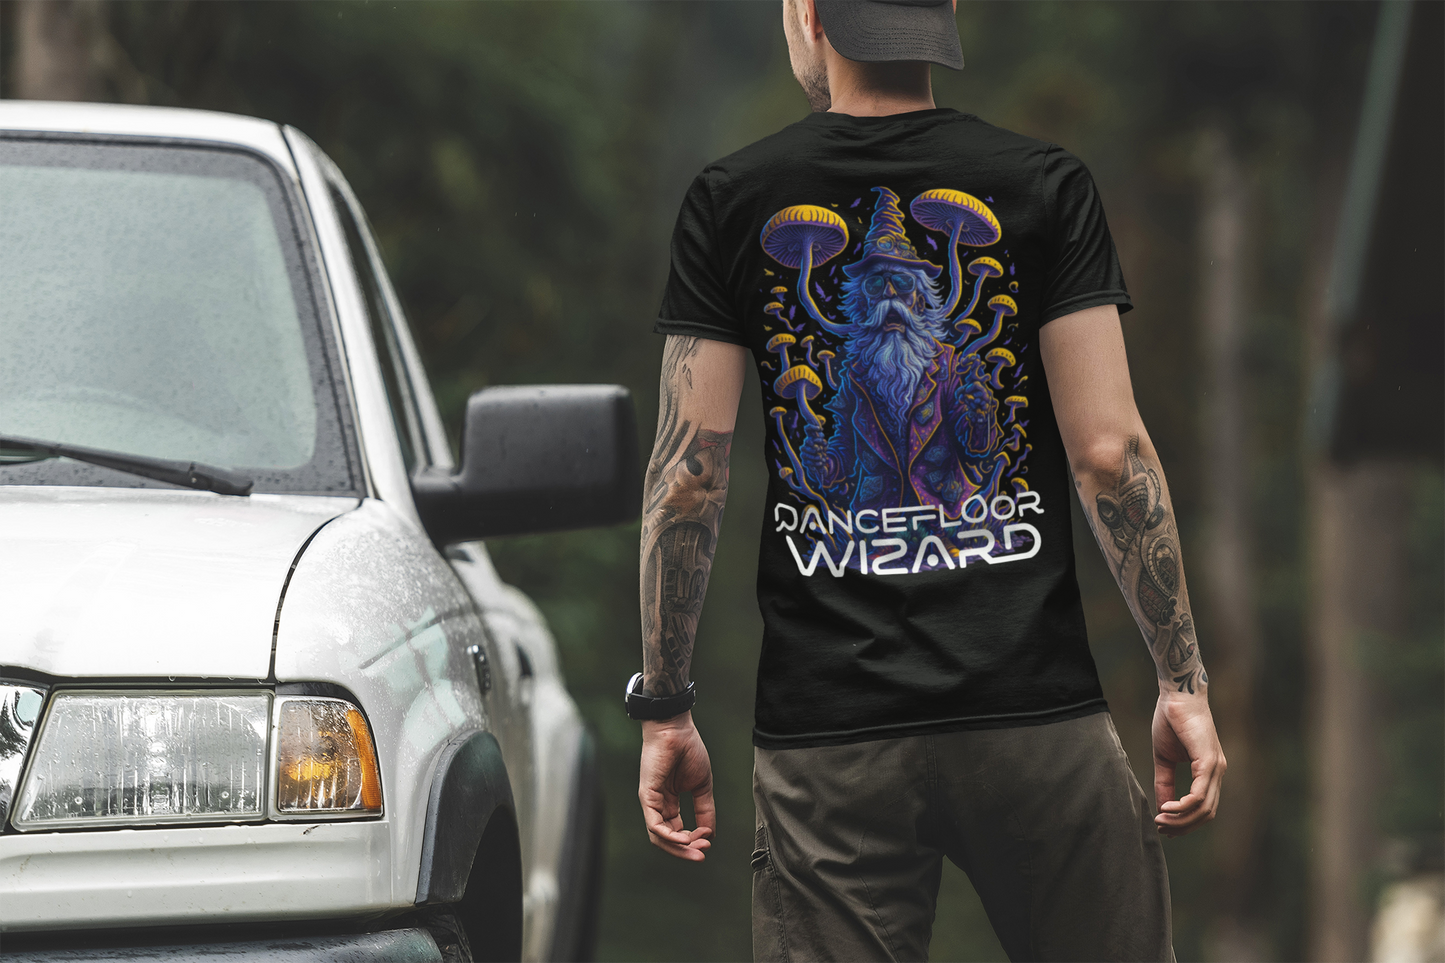 Dancefloor Wizard - Unisex T-Shirt - CatsOnDrugs